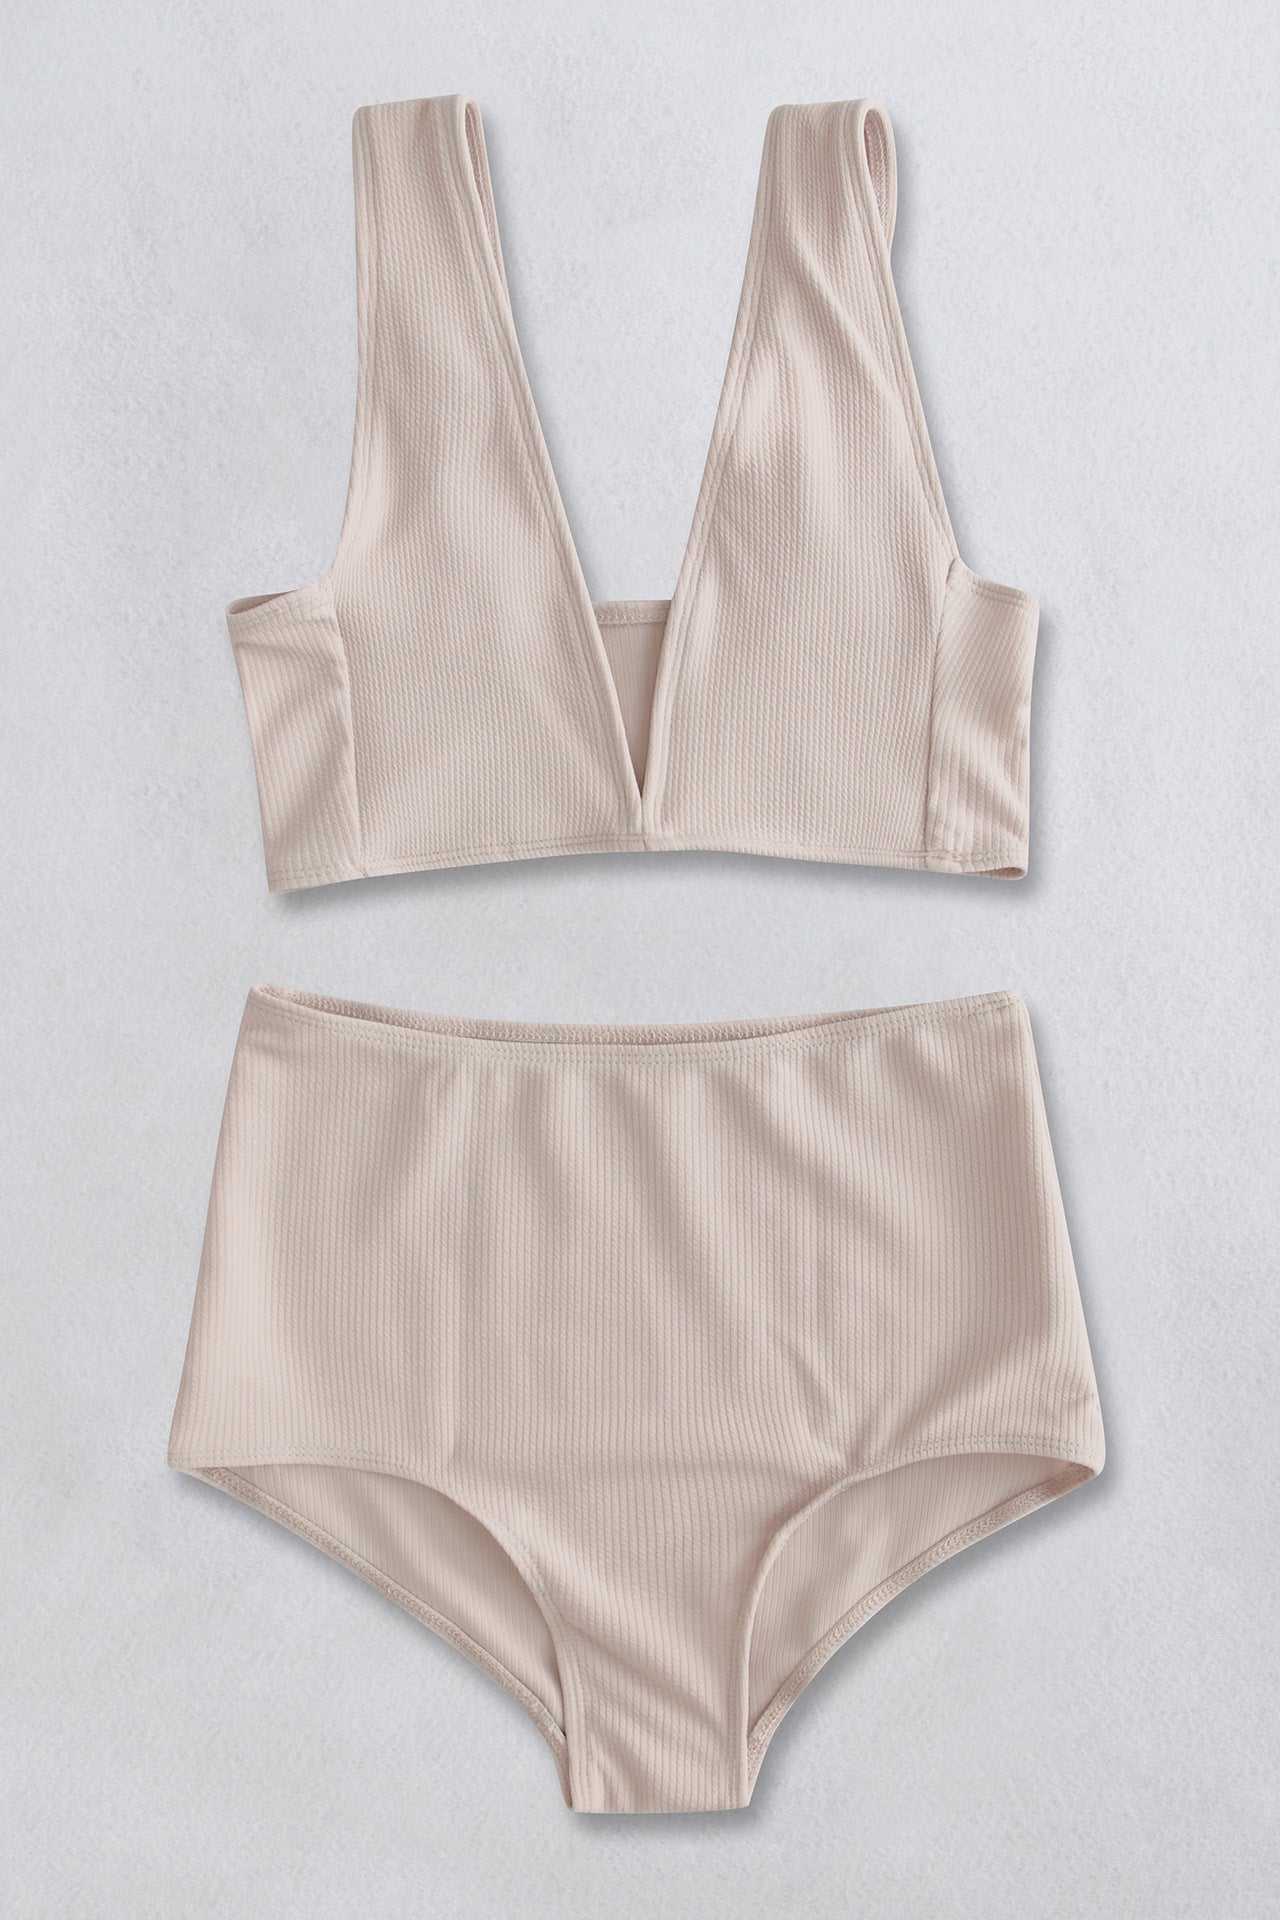 Ribbed High Waist Bikini Set- light pink bikini set with wide straps and high waist. #Firefly Lane Boutique1